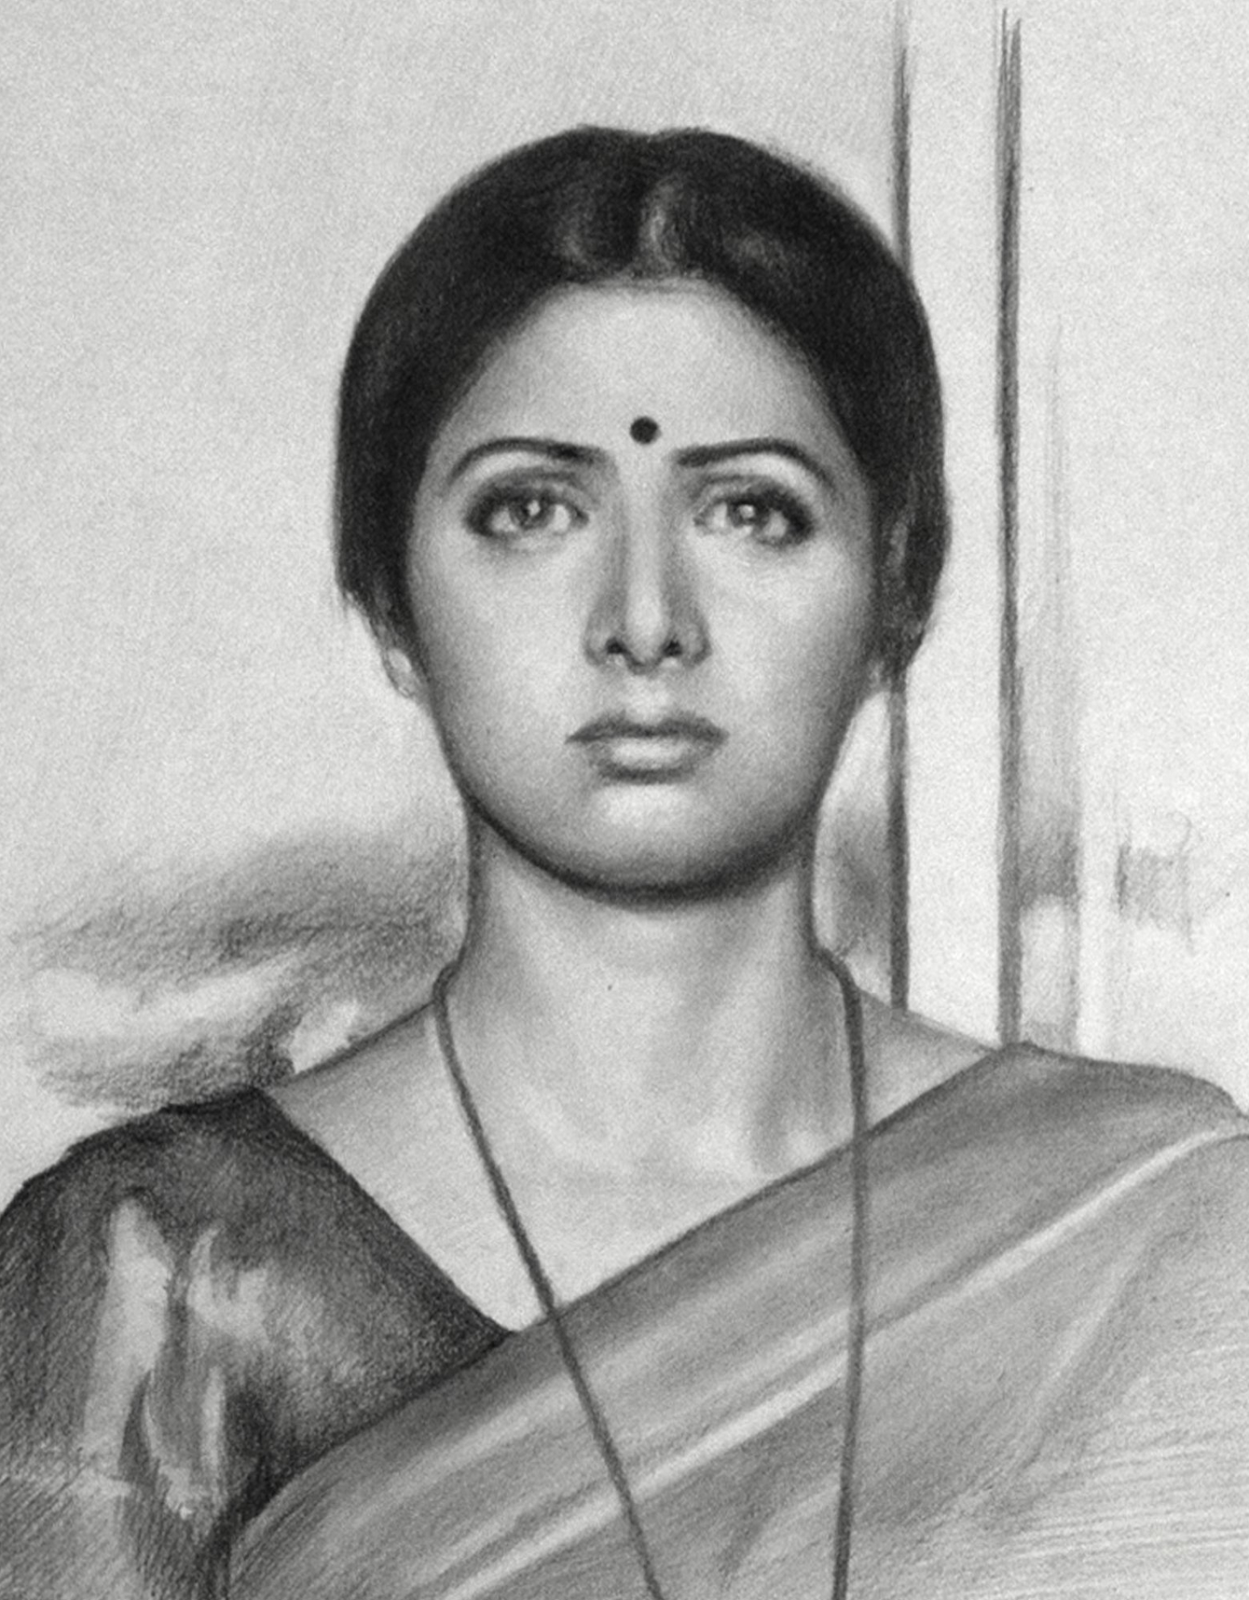 Sridevi: Fan Art: Sridevi sketch inspired by her look in Judaai